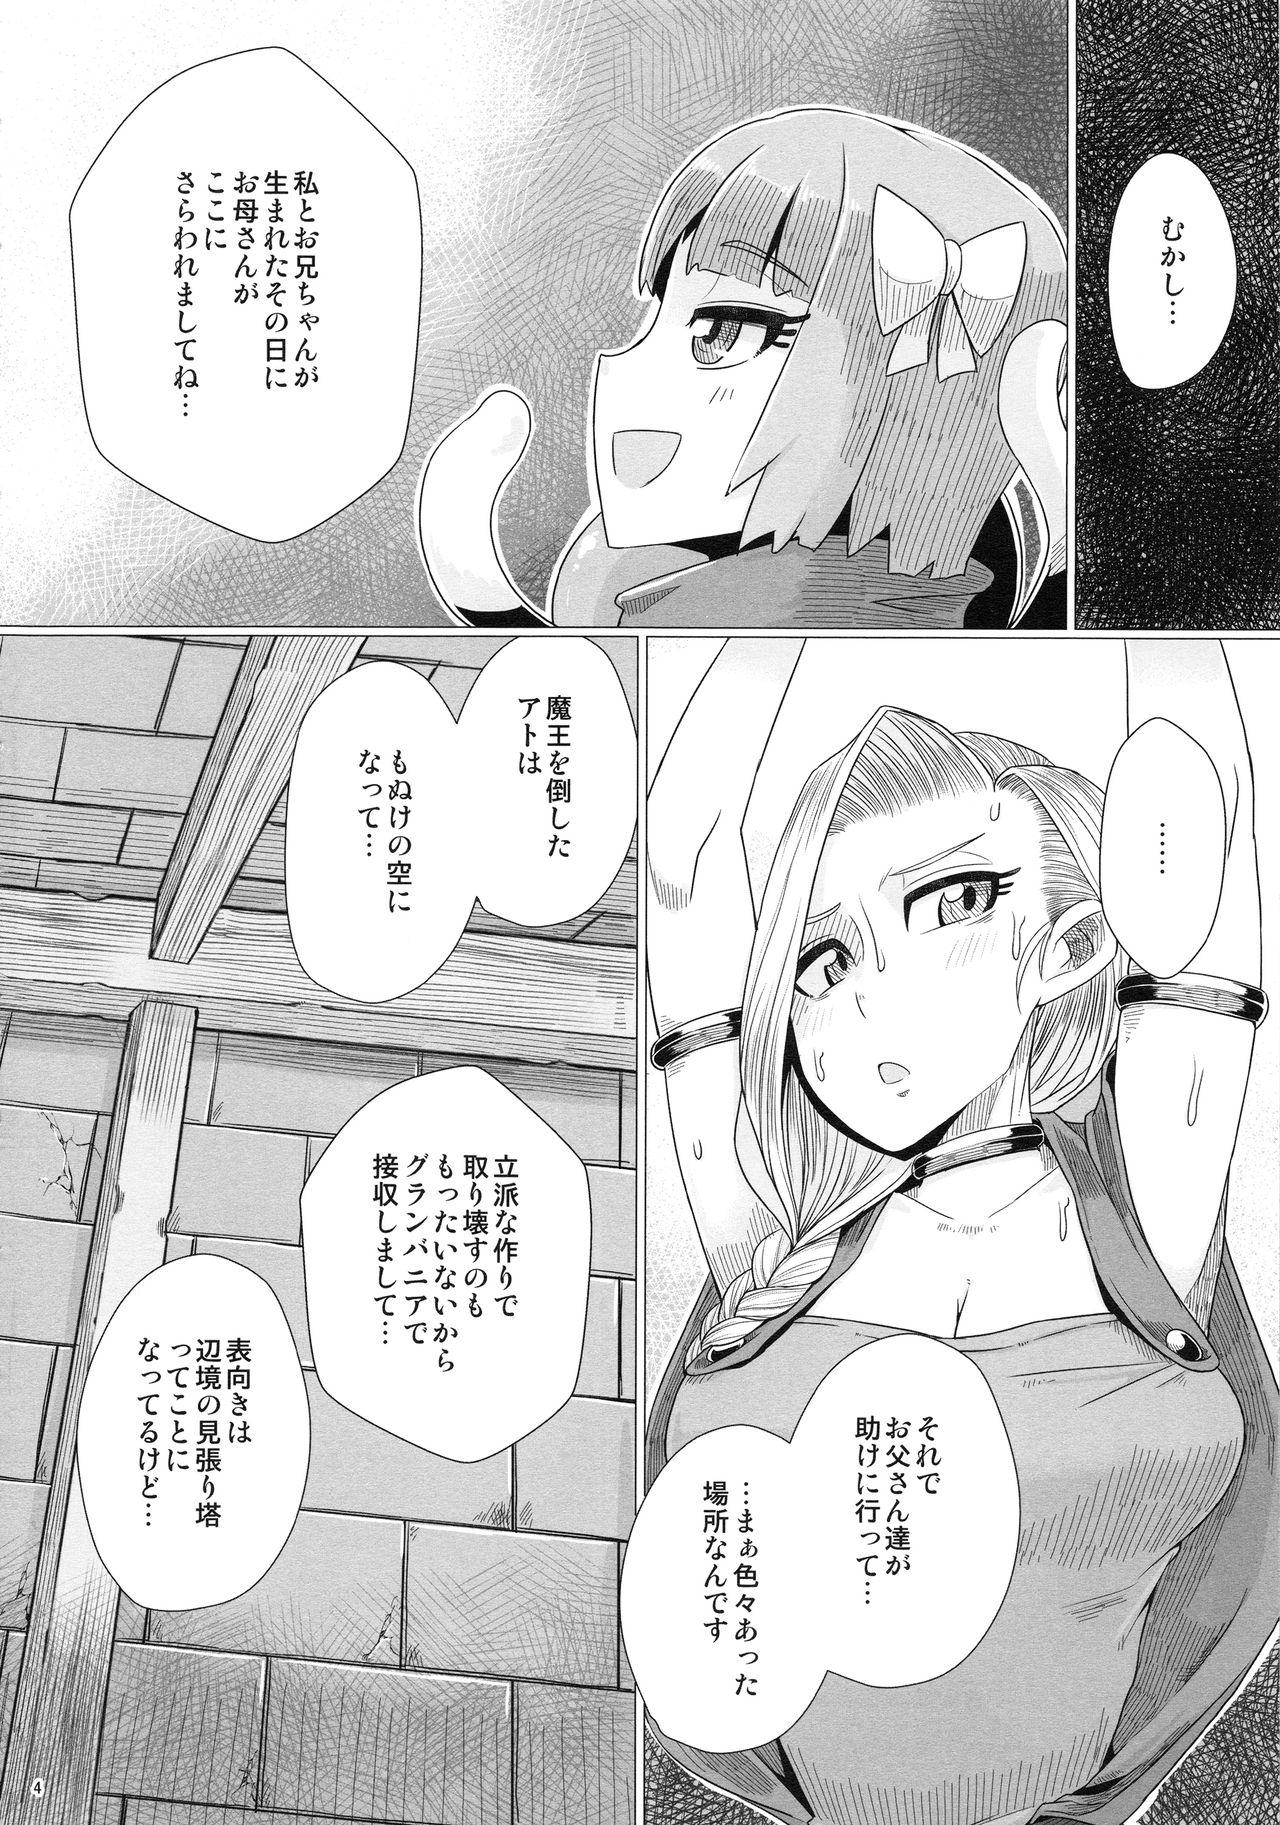 Deep Zoku Yamaoku e Ikou! - Dragon quest v Adolescente - Page 5